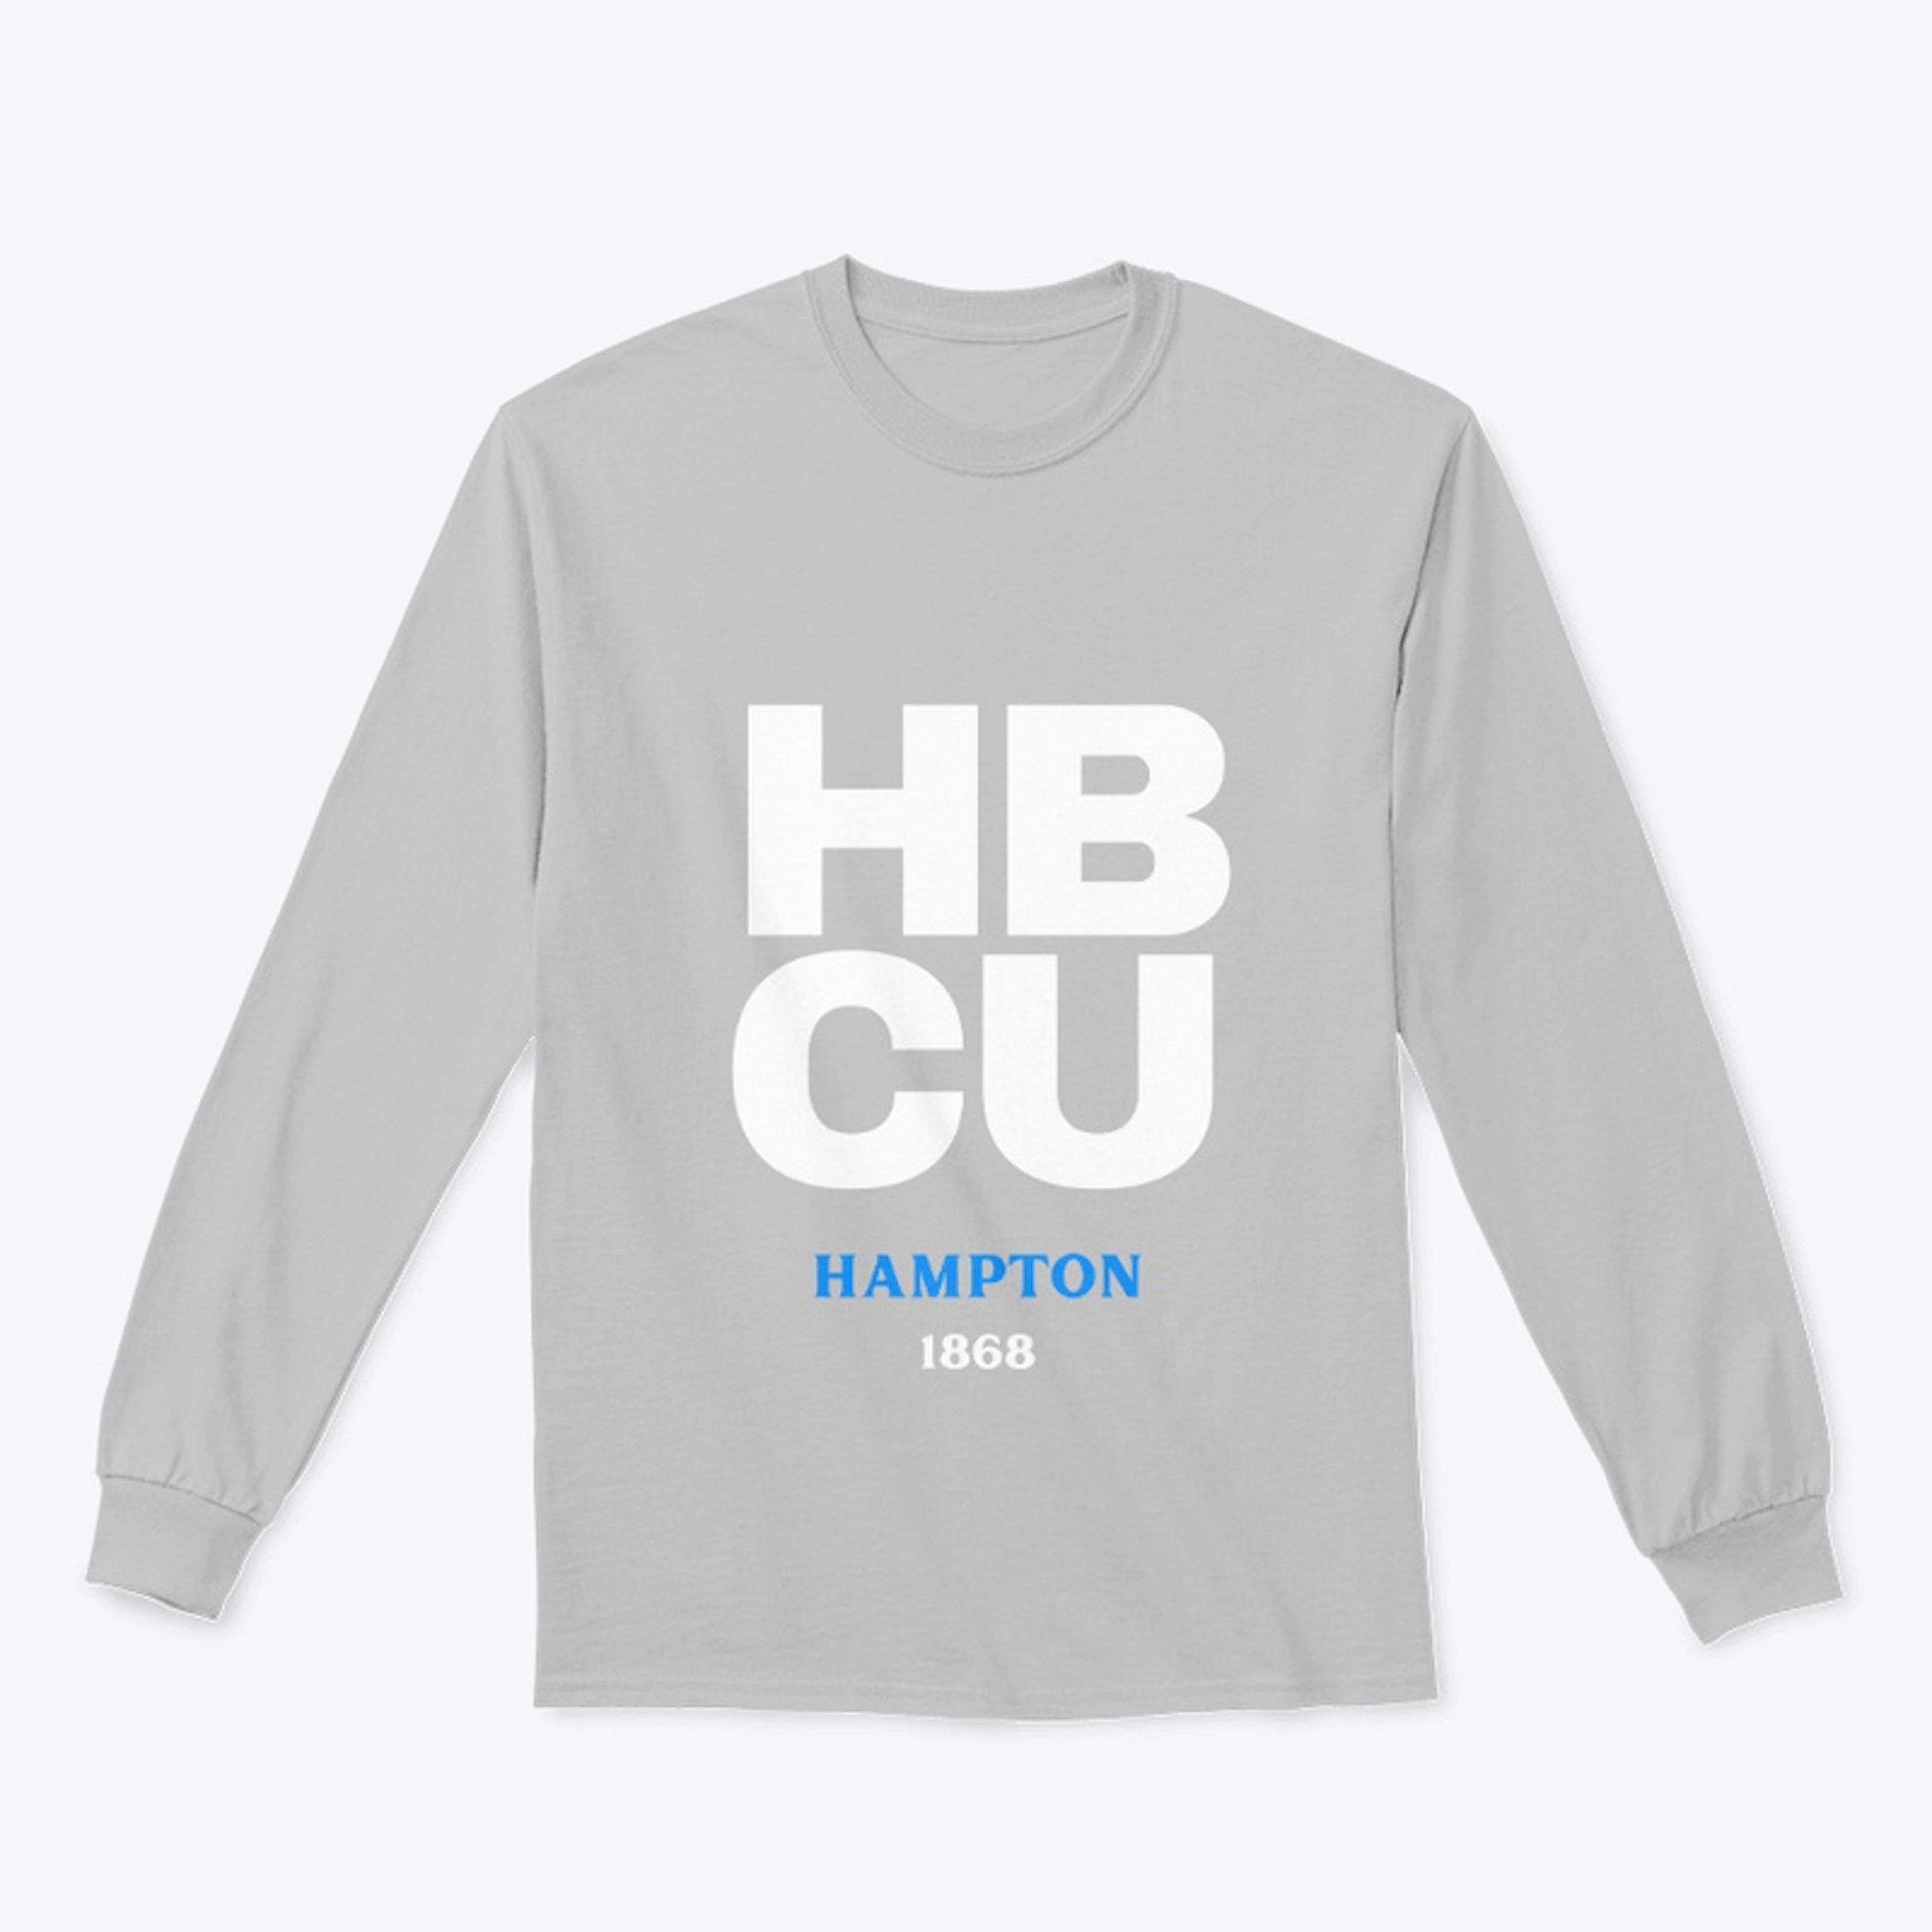 HBCU: Hampton University